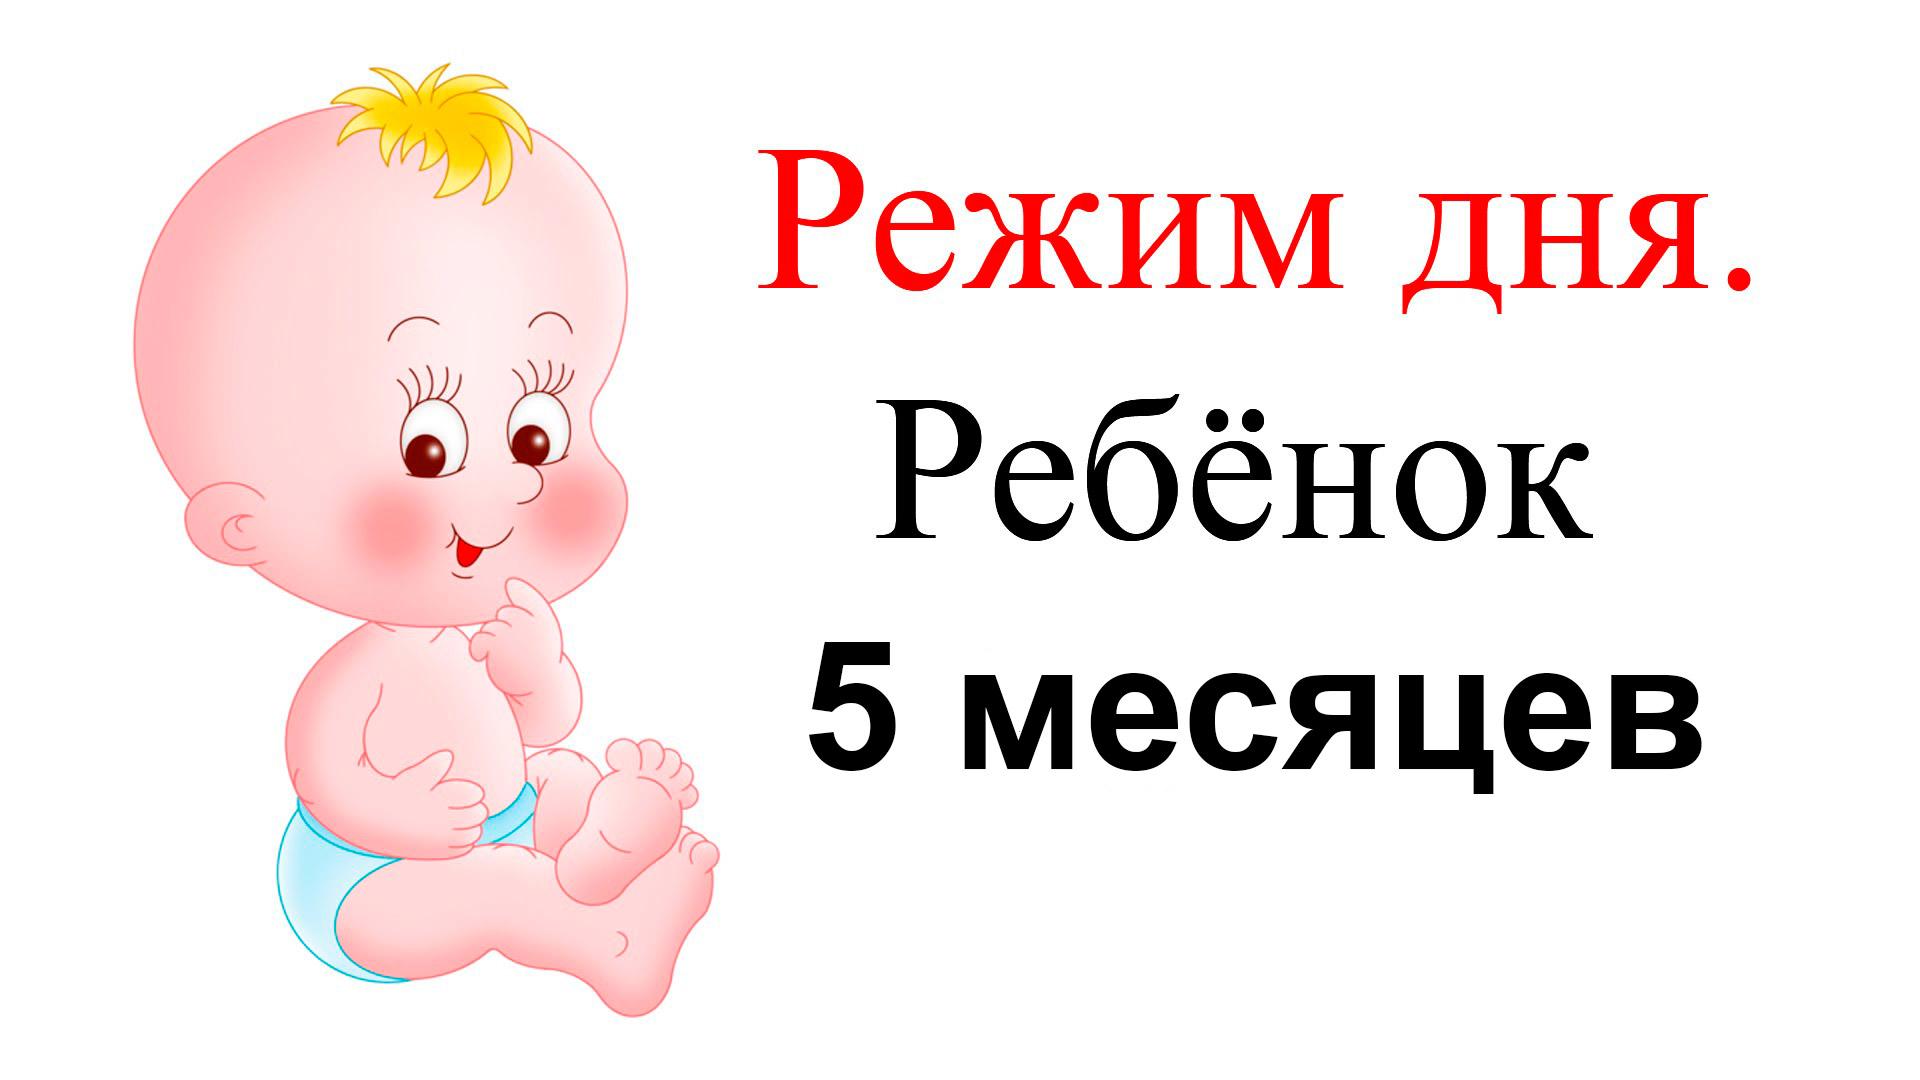 Ребенок на 5 месяце жизни развитие режим дня thumbnail